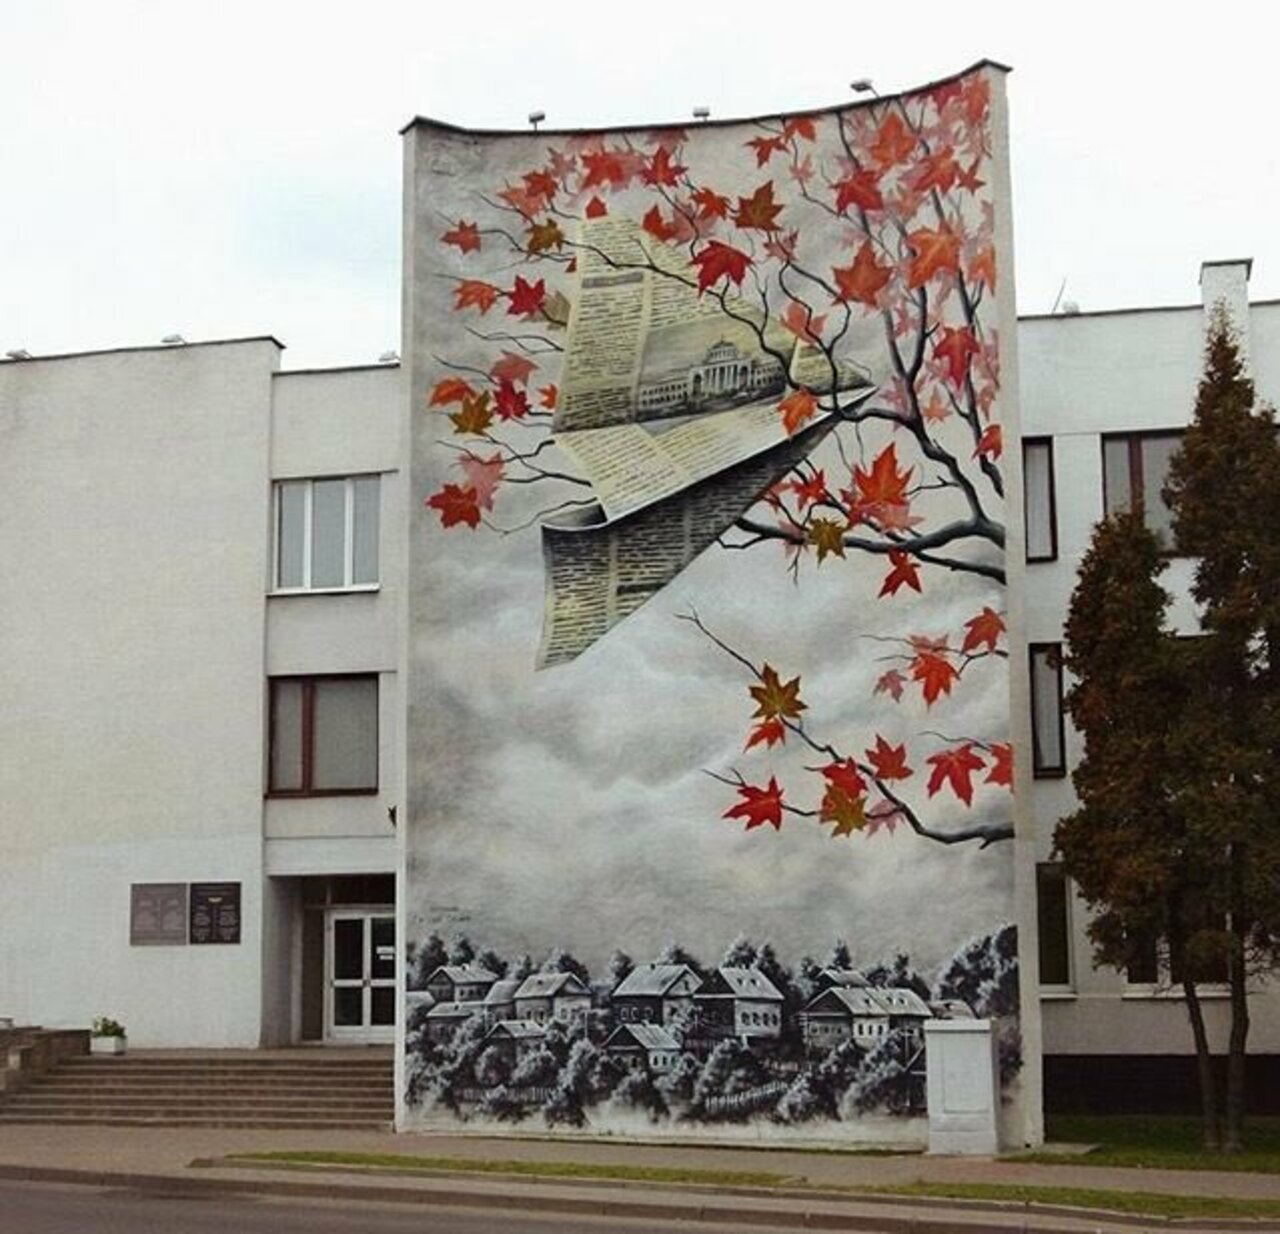 RT GoogleStreetArt: New Street Art by MUTUS in Belarus 

#art #graffiti #mural #streetart https://t.co/fKJFRbWmtF https://goo.gl/t4fpx2